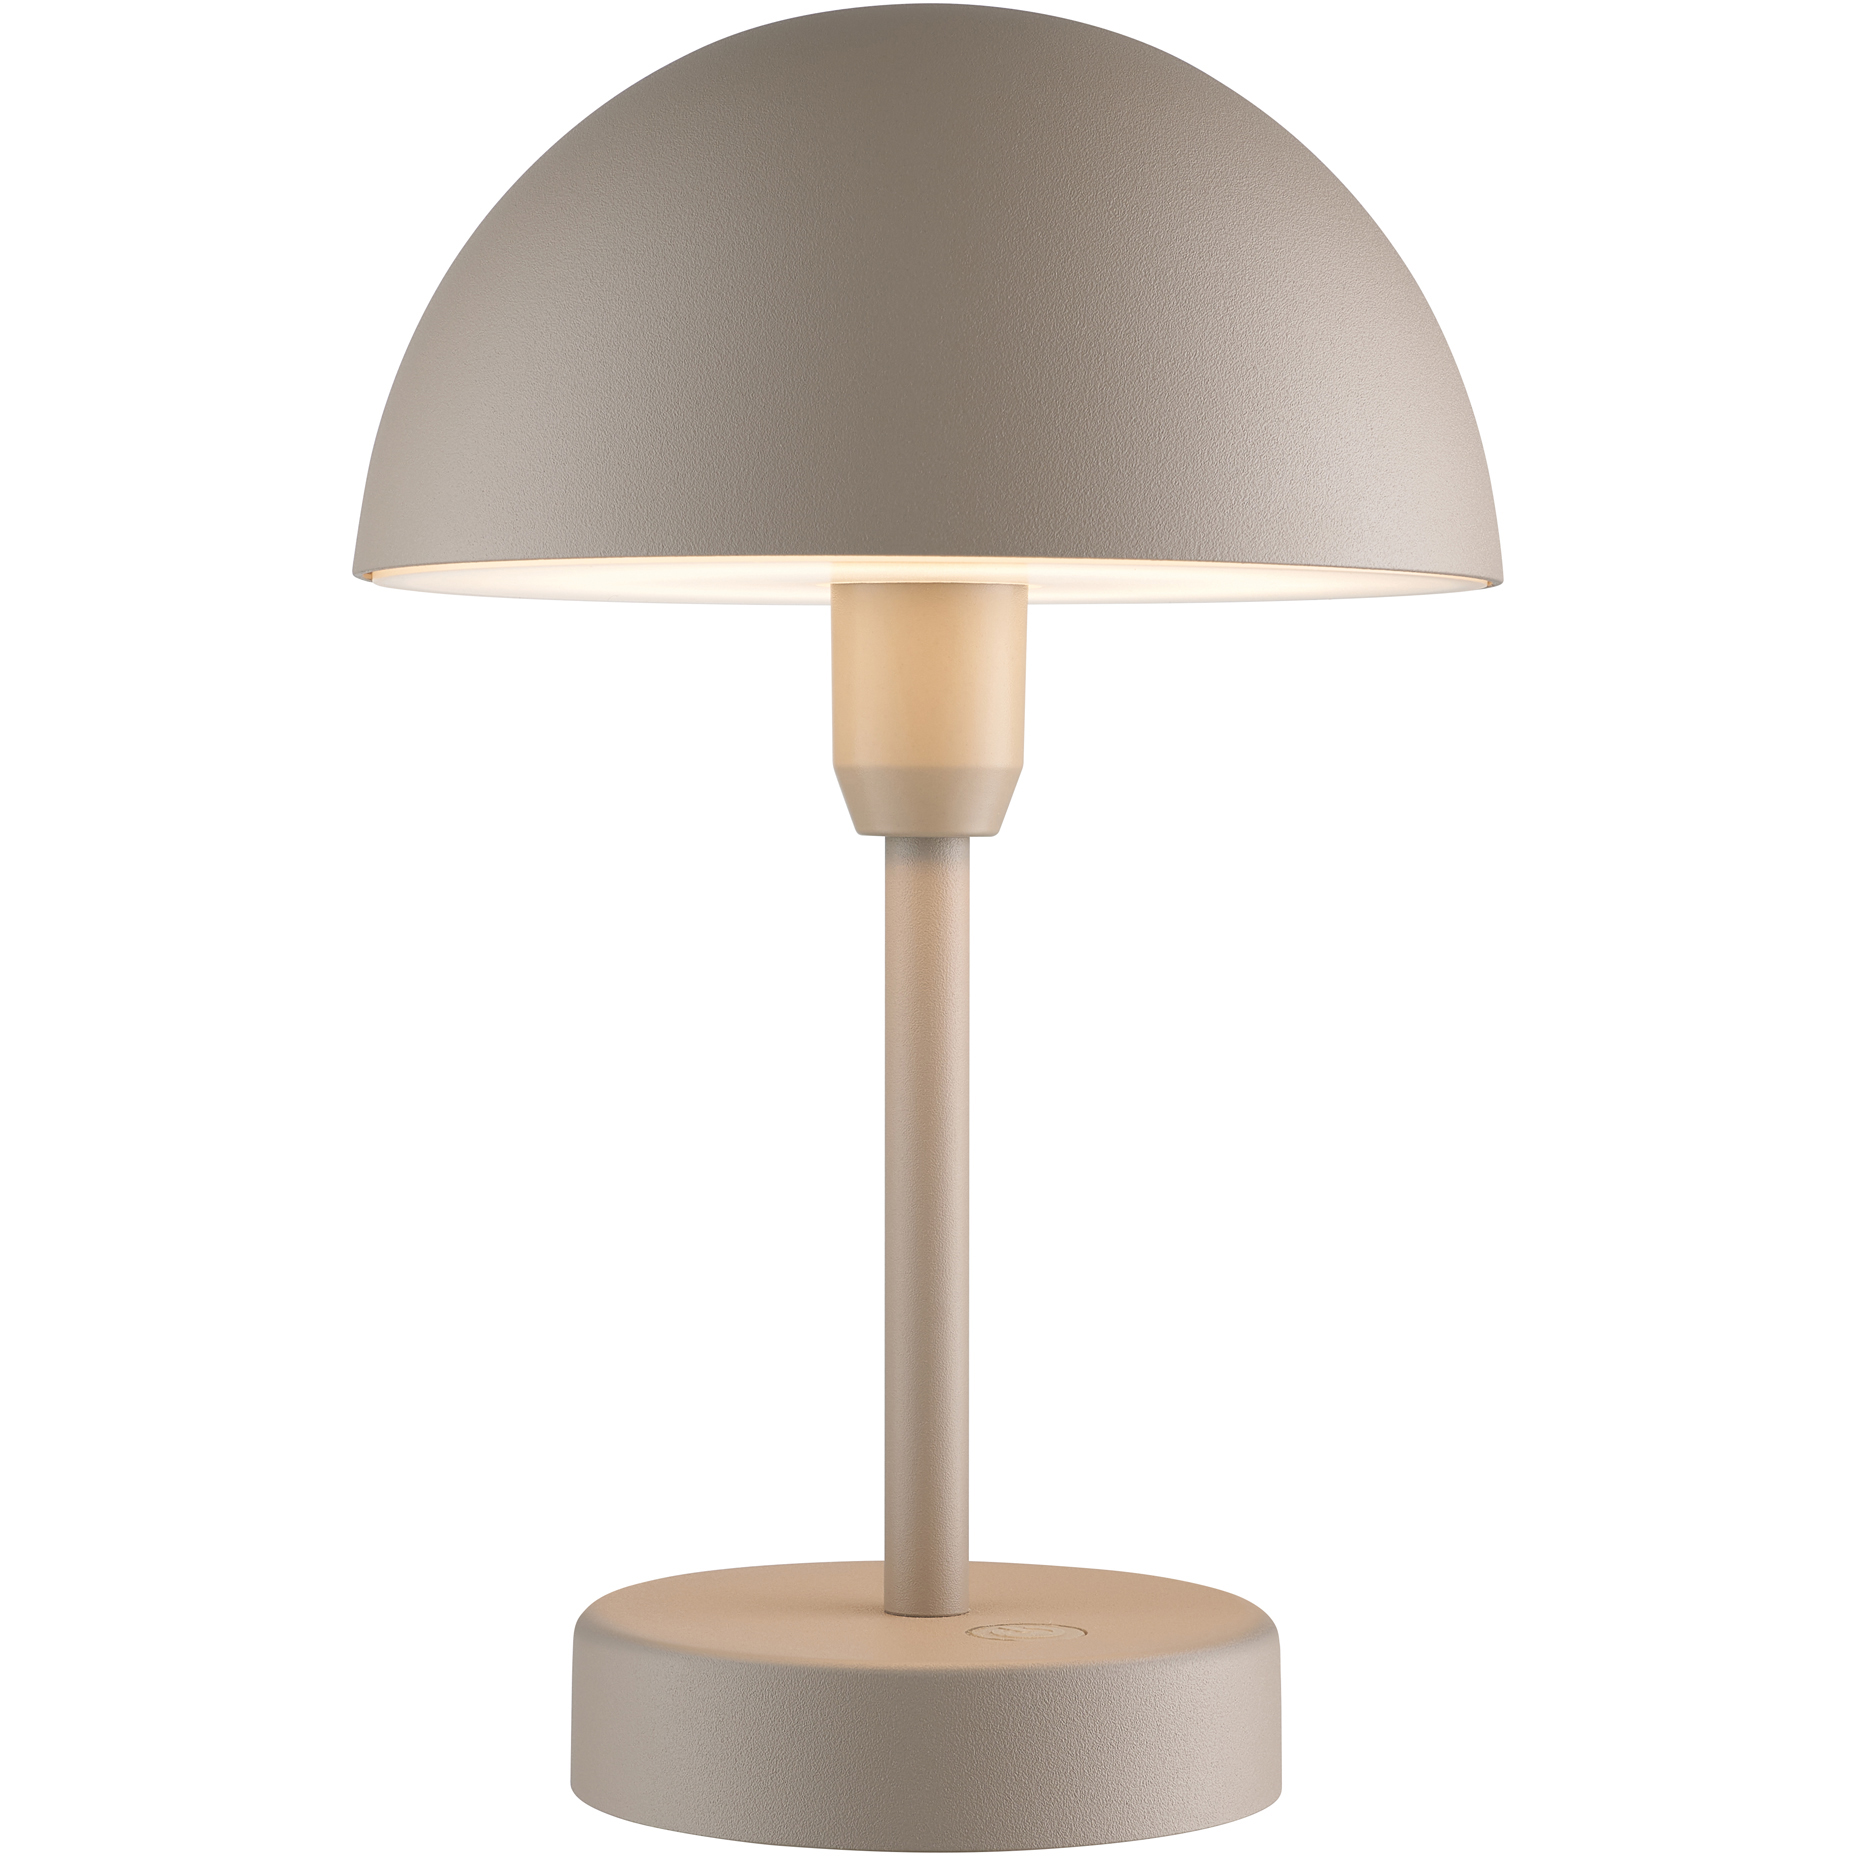 5704924017490 Nordlux Ellen To-Go beige - Bordlampe portable Lamper,Bordlamper,Trådløse bordlamper 87100011610 2418015009